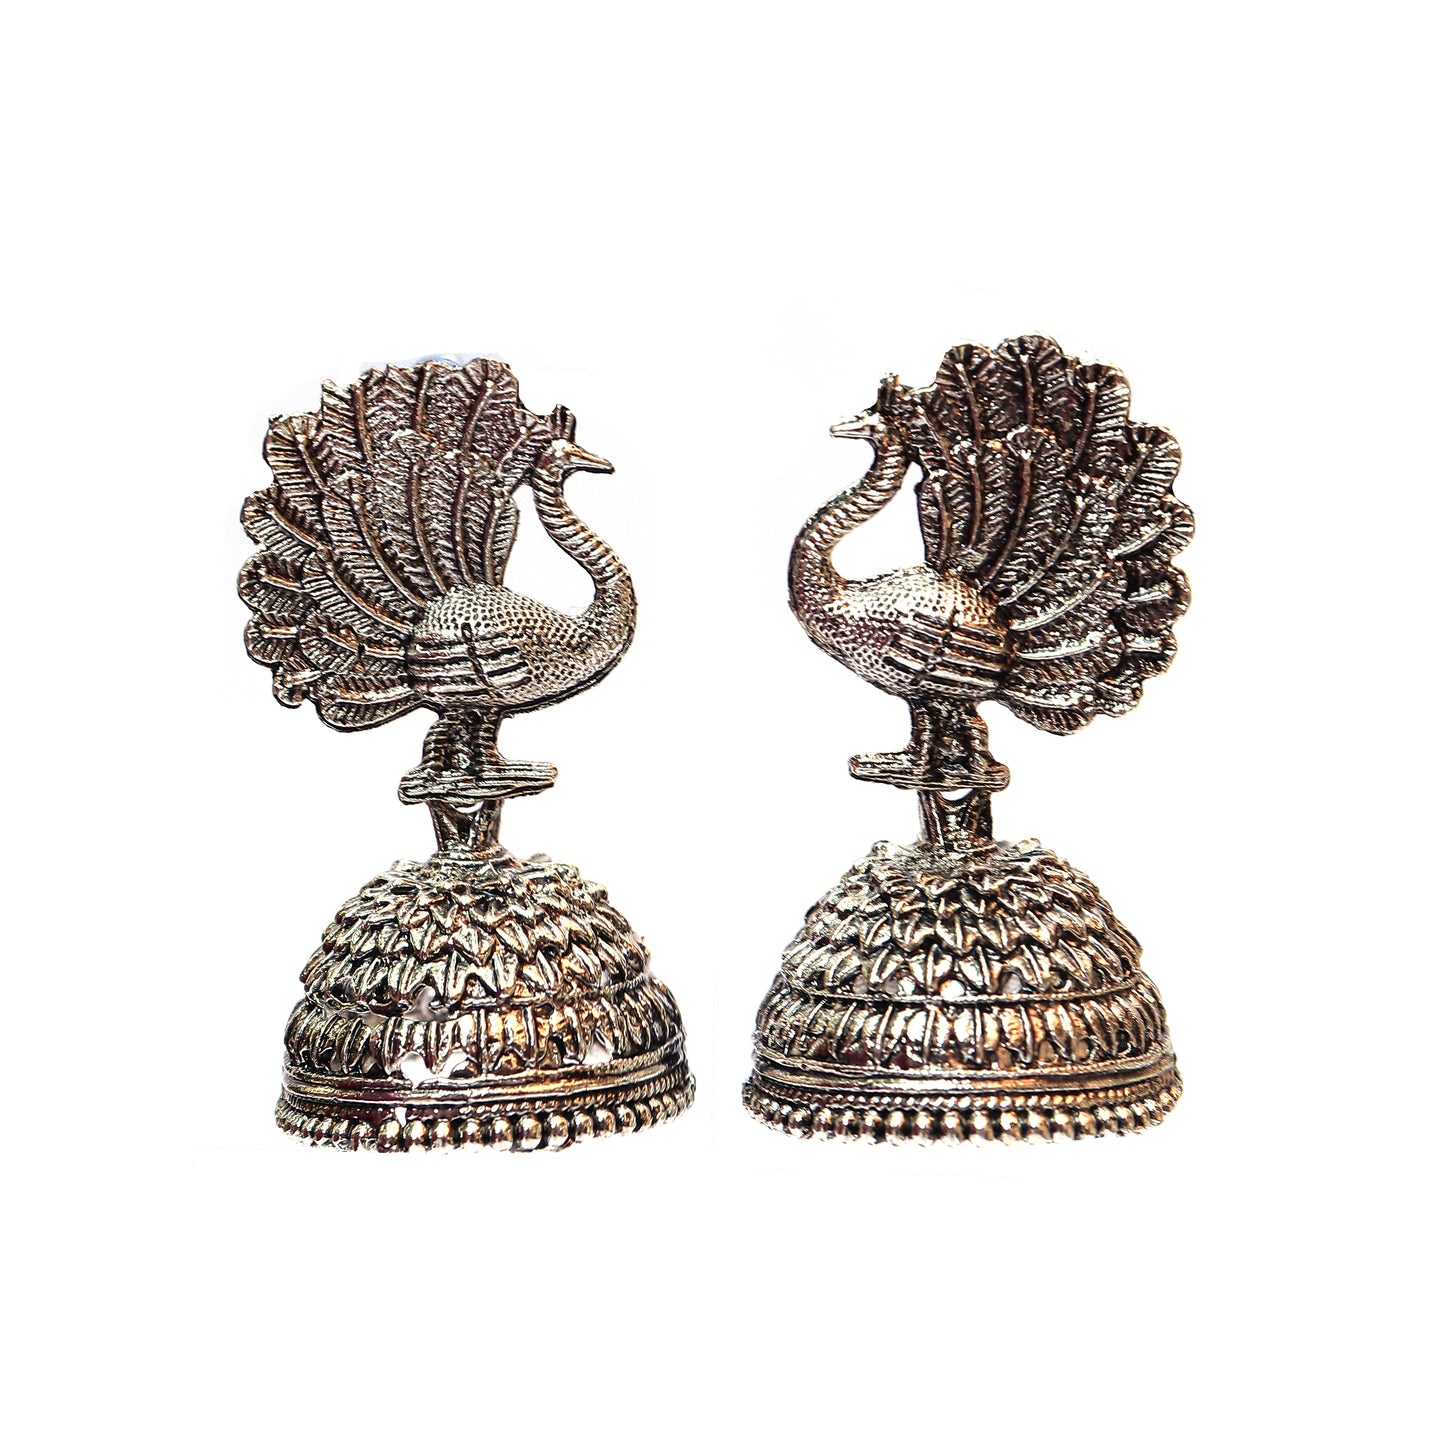 Store_of_arts Oxidized peacock jhumki earrings for women